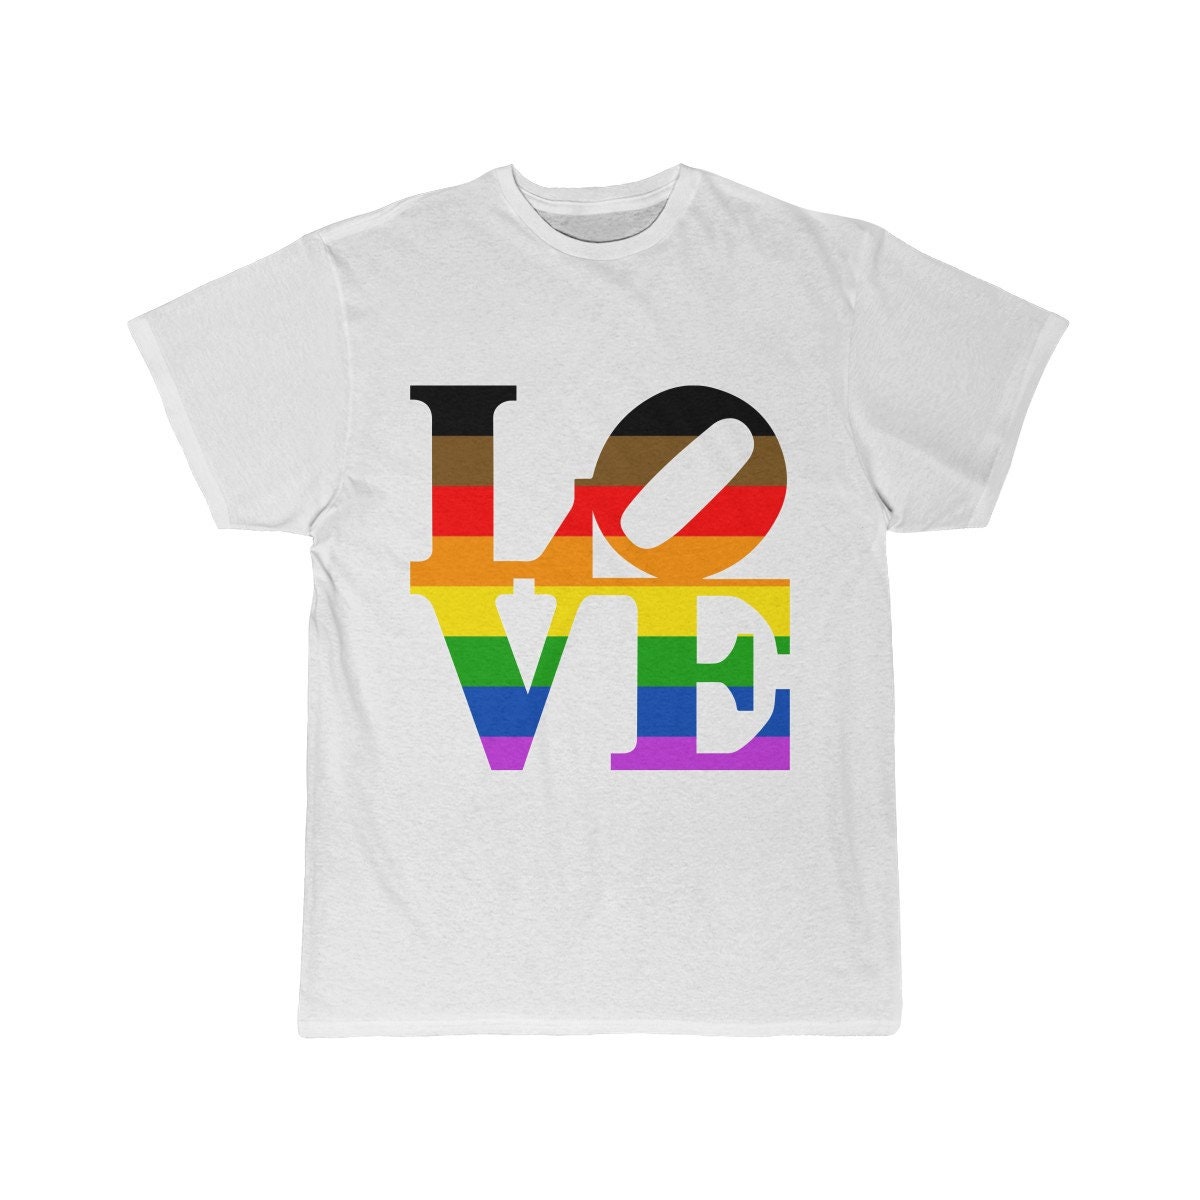 Philly Pride Love Statue Unisex Short Sleeve T-Shirt lgbt | Etsy